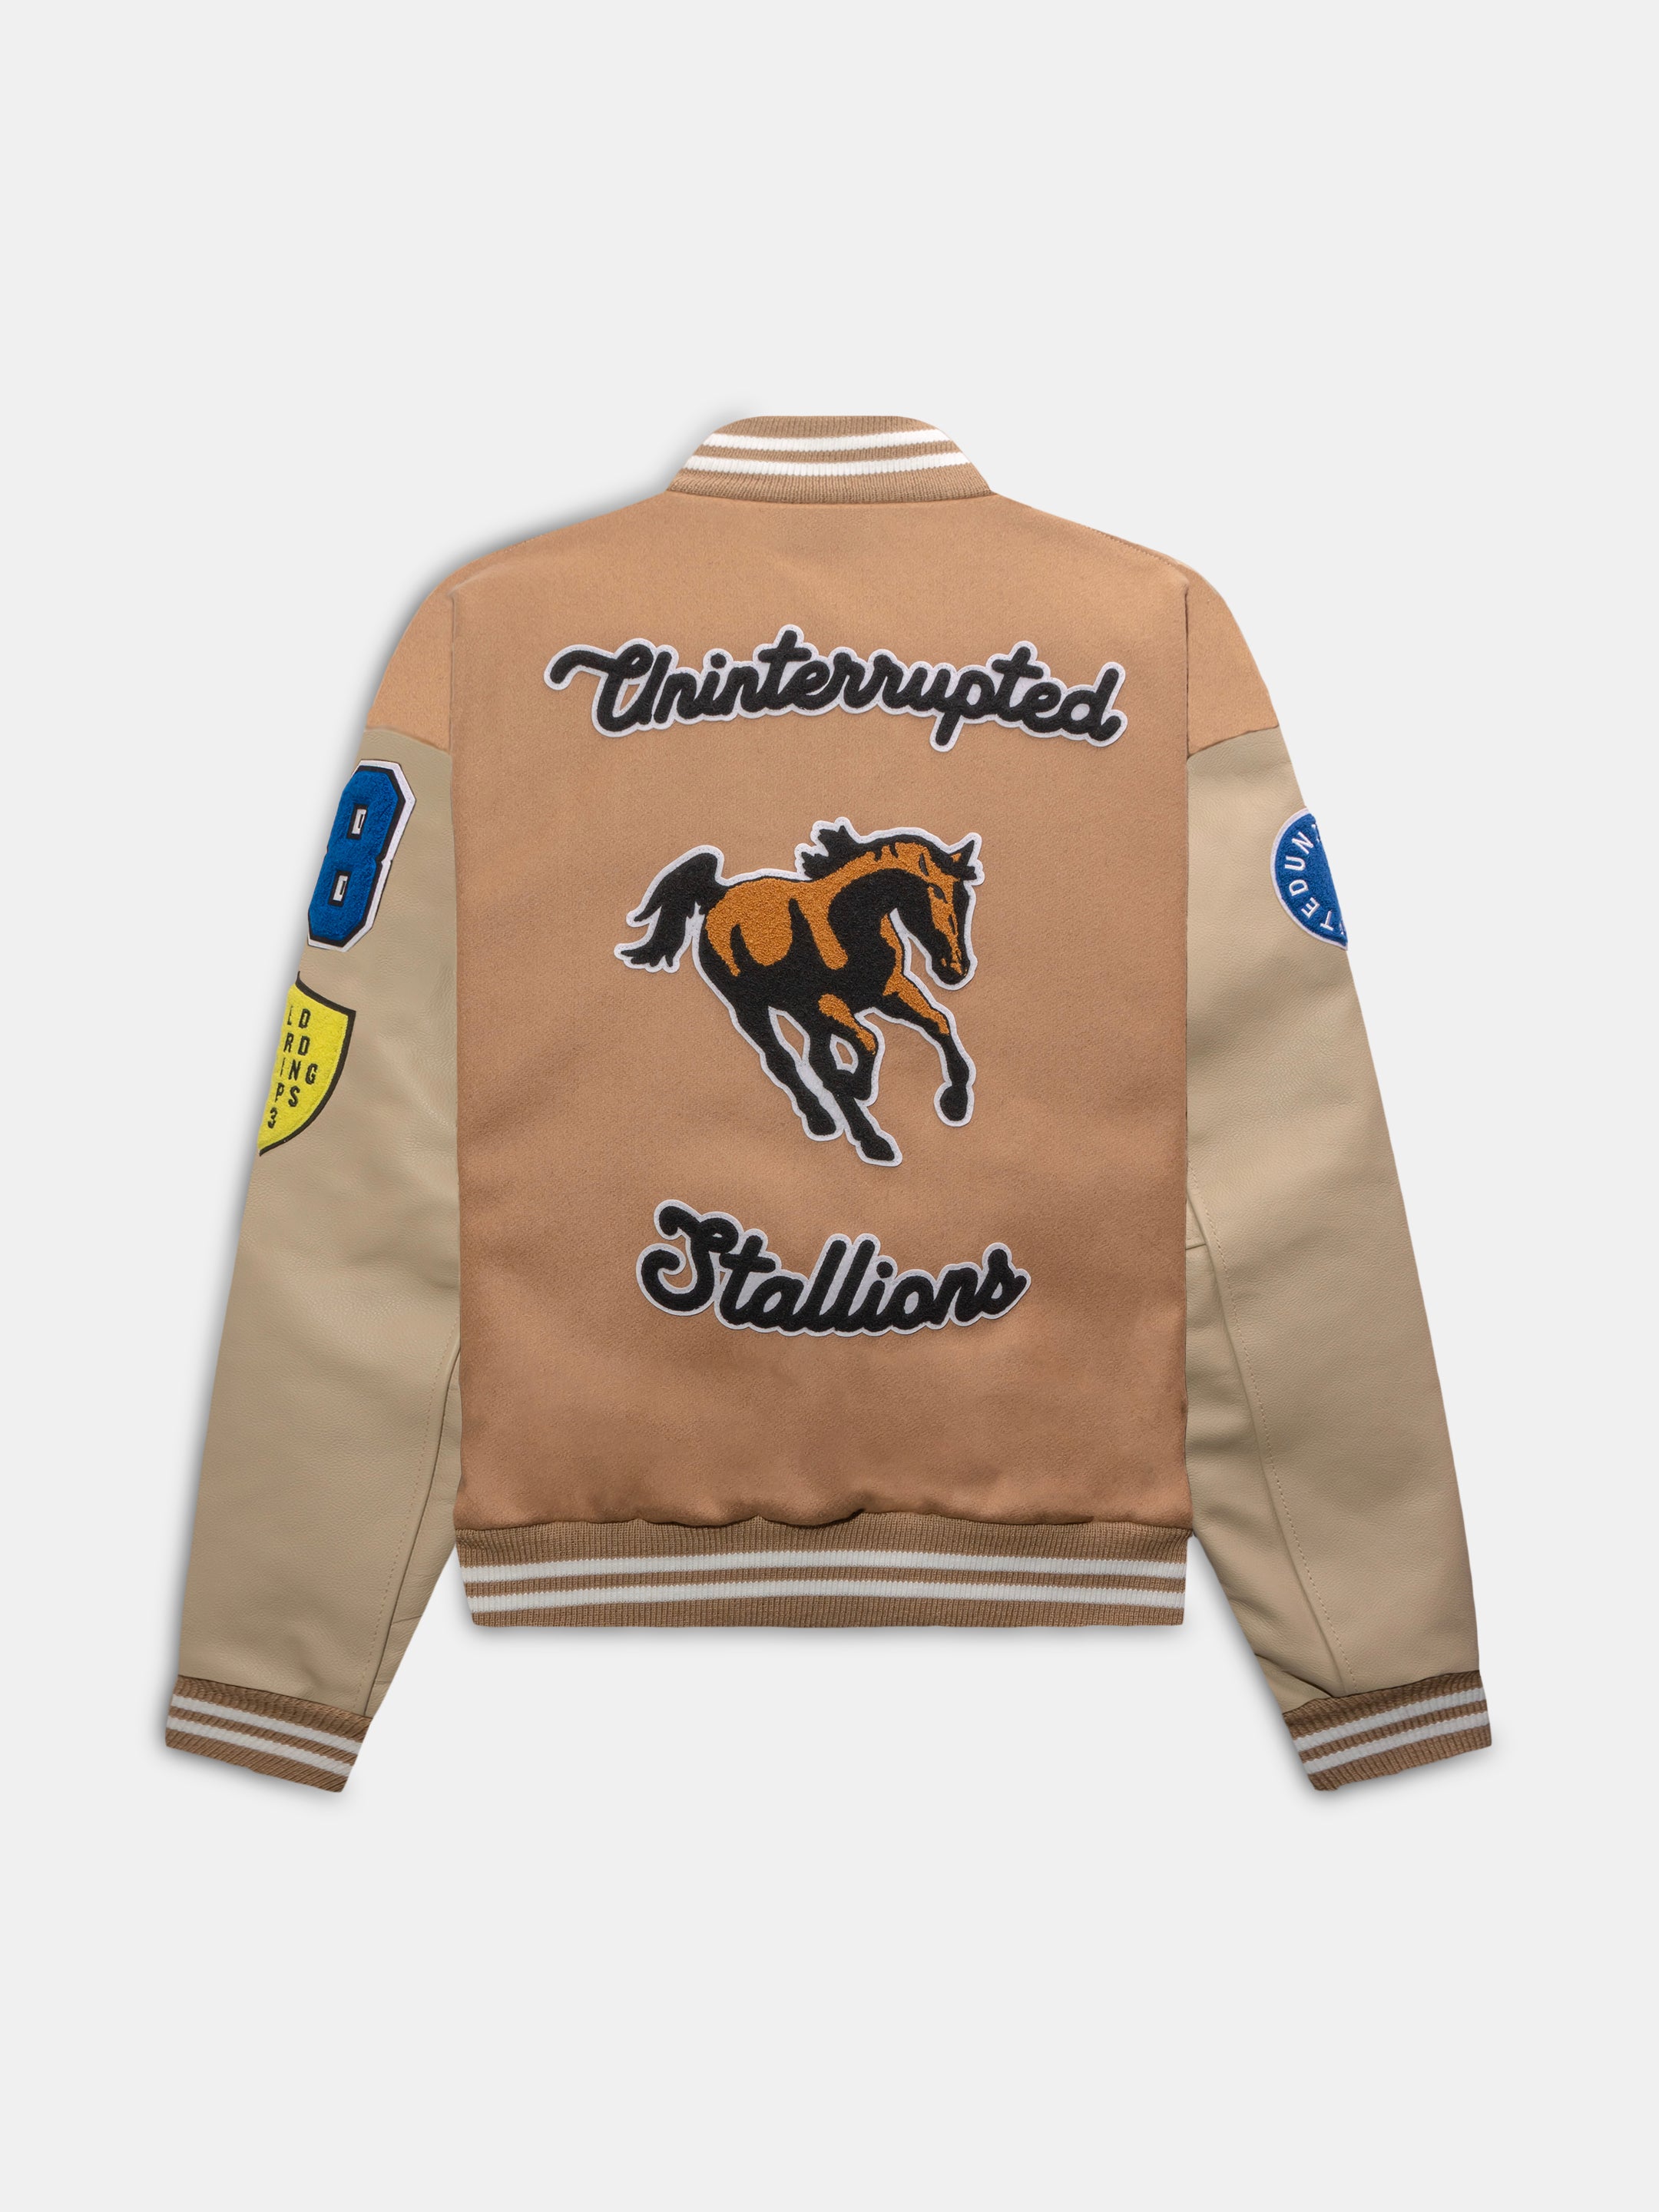 UNINTERRUPTED Stallions Tan Varsity Jacket by Settlemier's